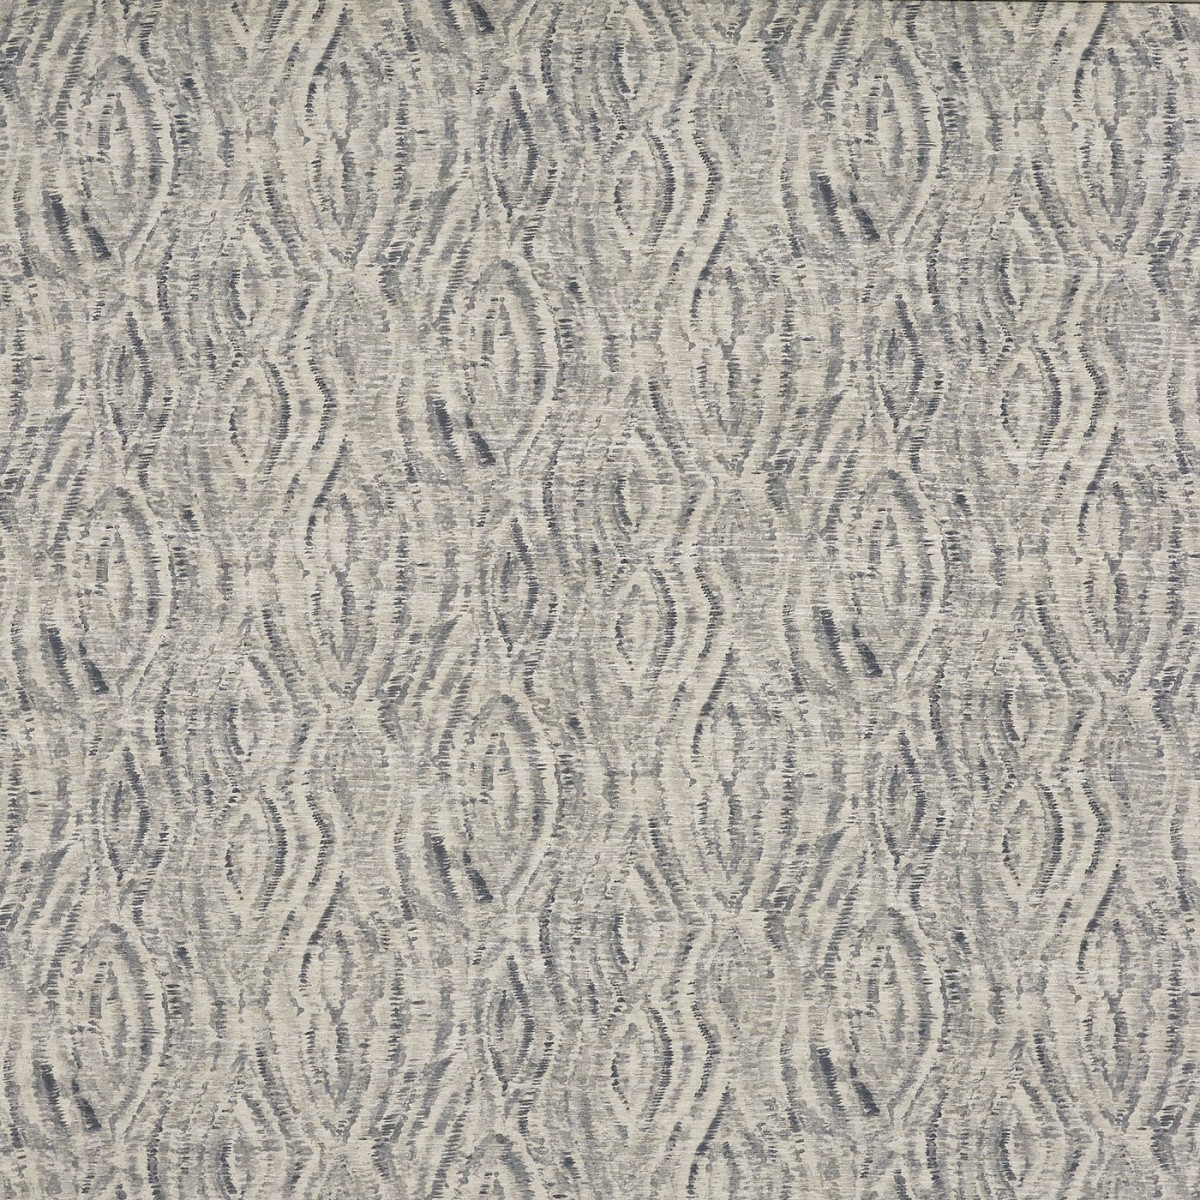 Aries Mercury Fabric by Prestigious Textiles